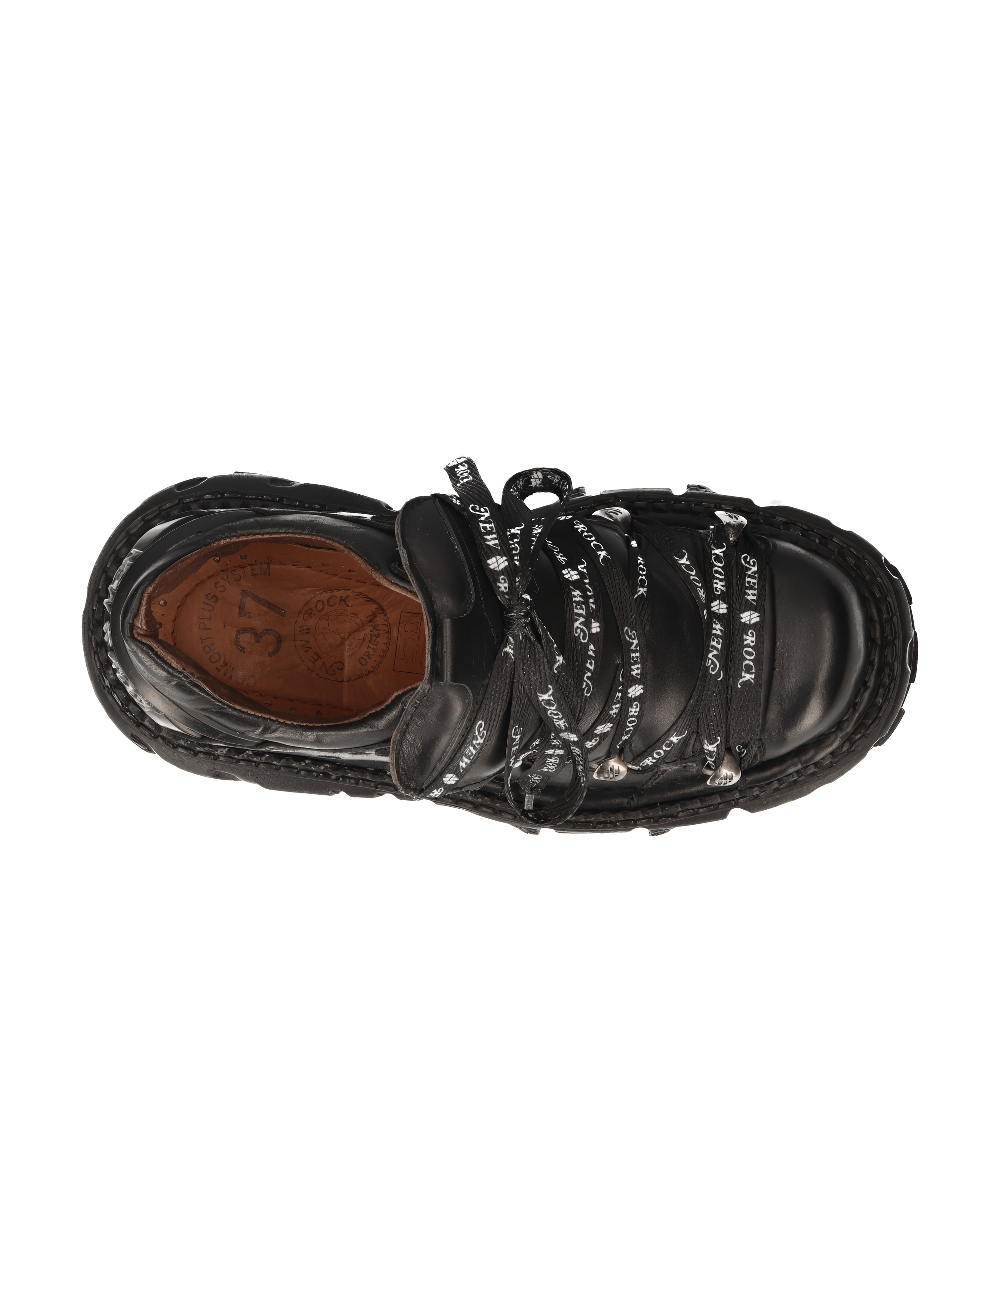 NEW ROCK Punk Style Black Leather Platform Ankle Boots